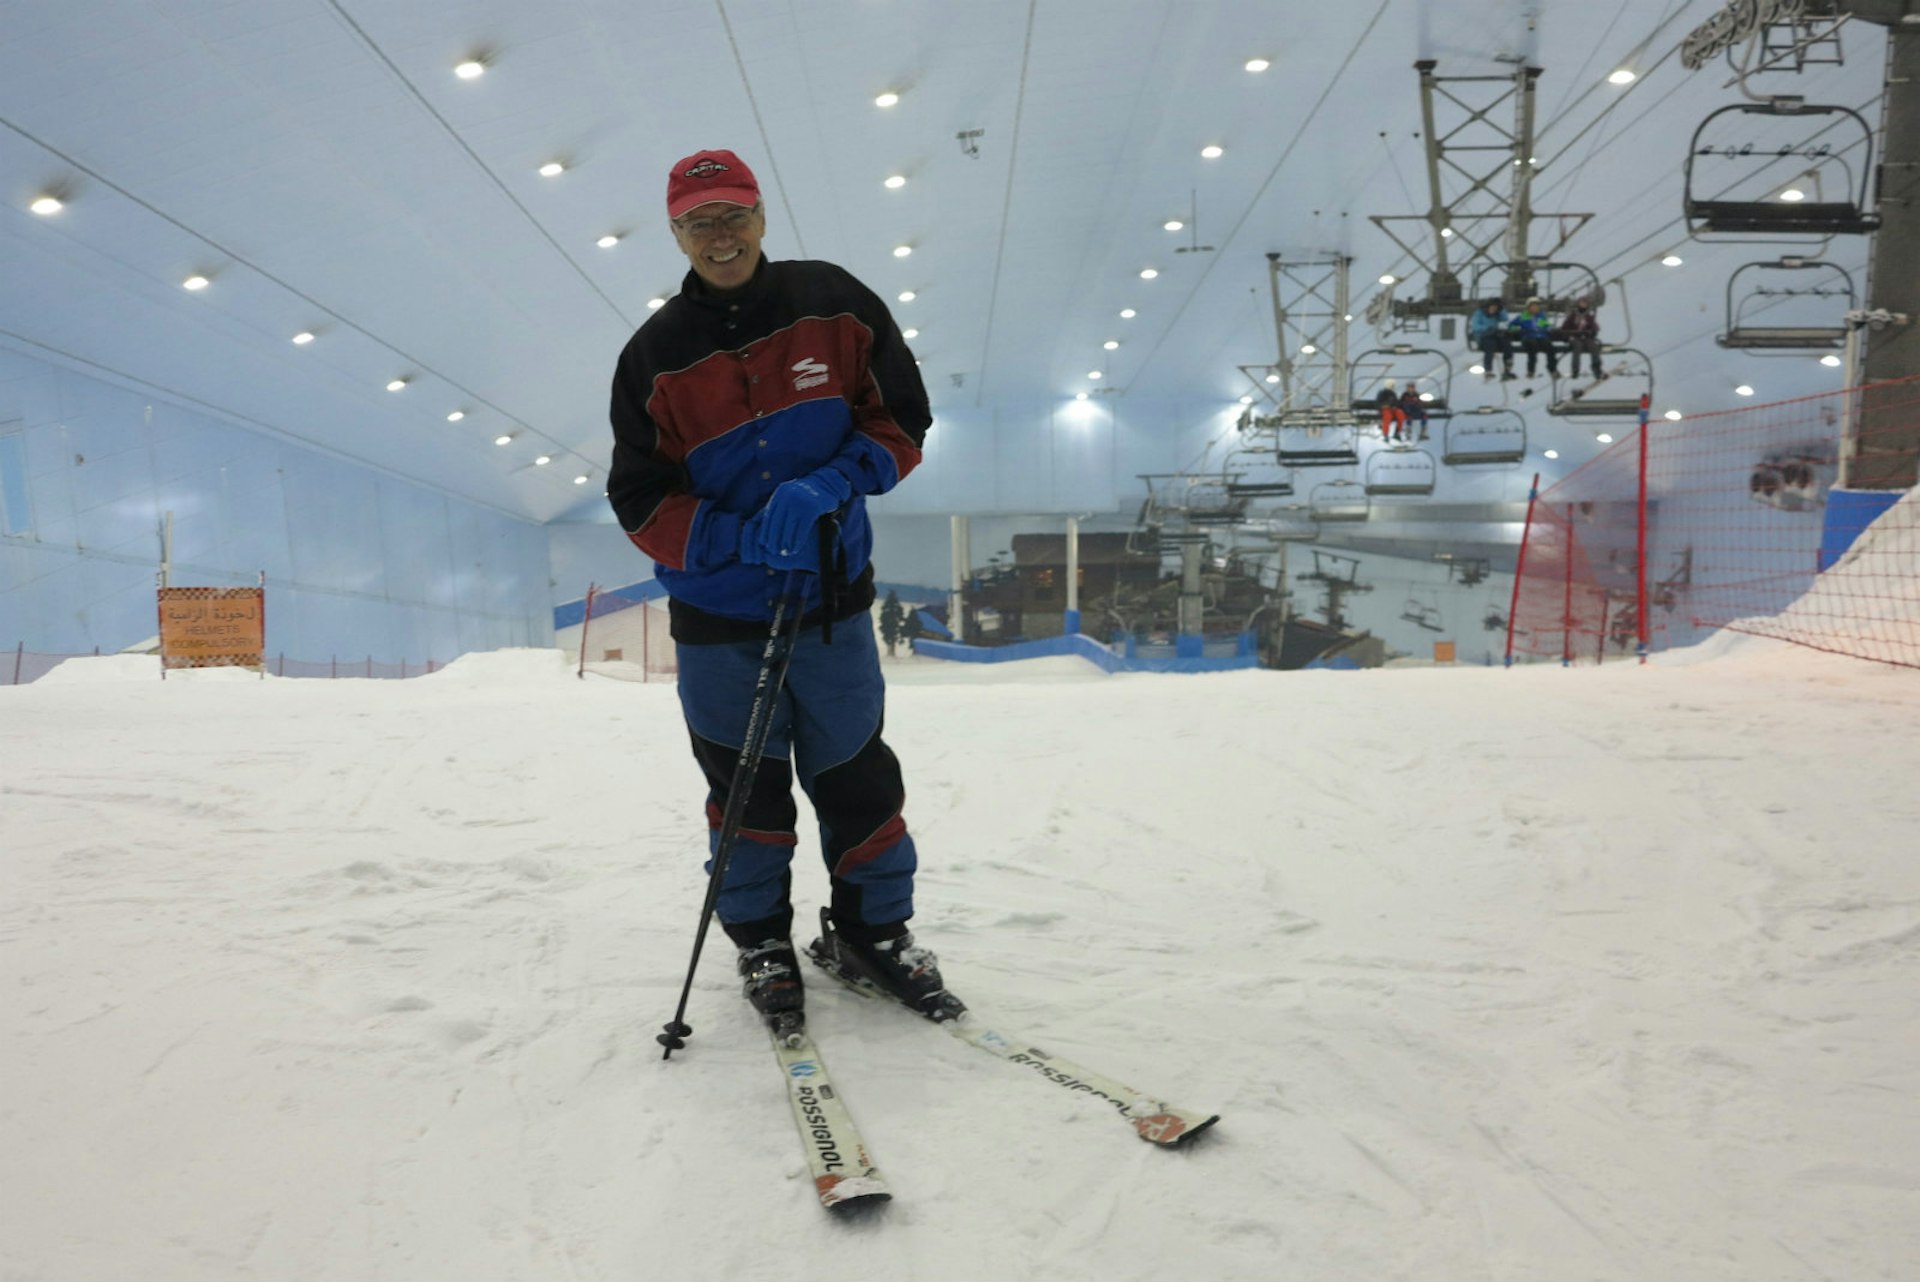 Tony Wheeler's top 10 cities - Tony poses at the top of an indoor ski slope in Dubai. © Tony Wheeler / Lonely Planet